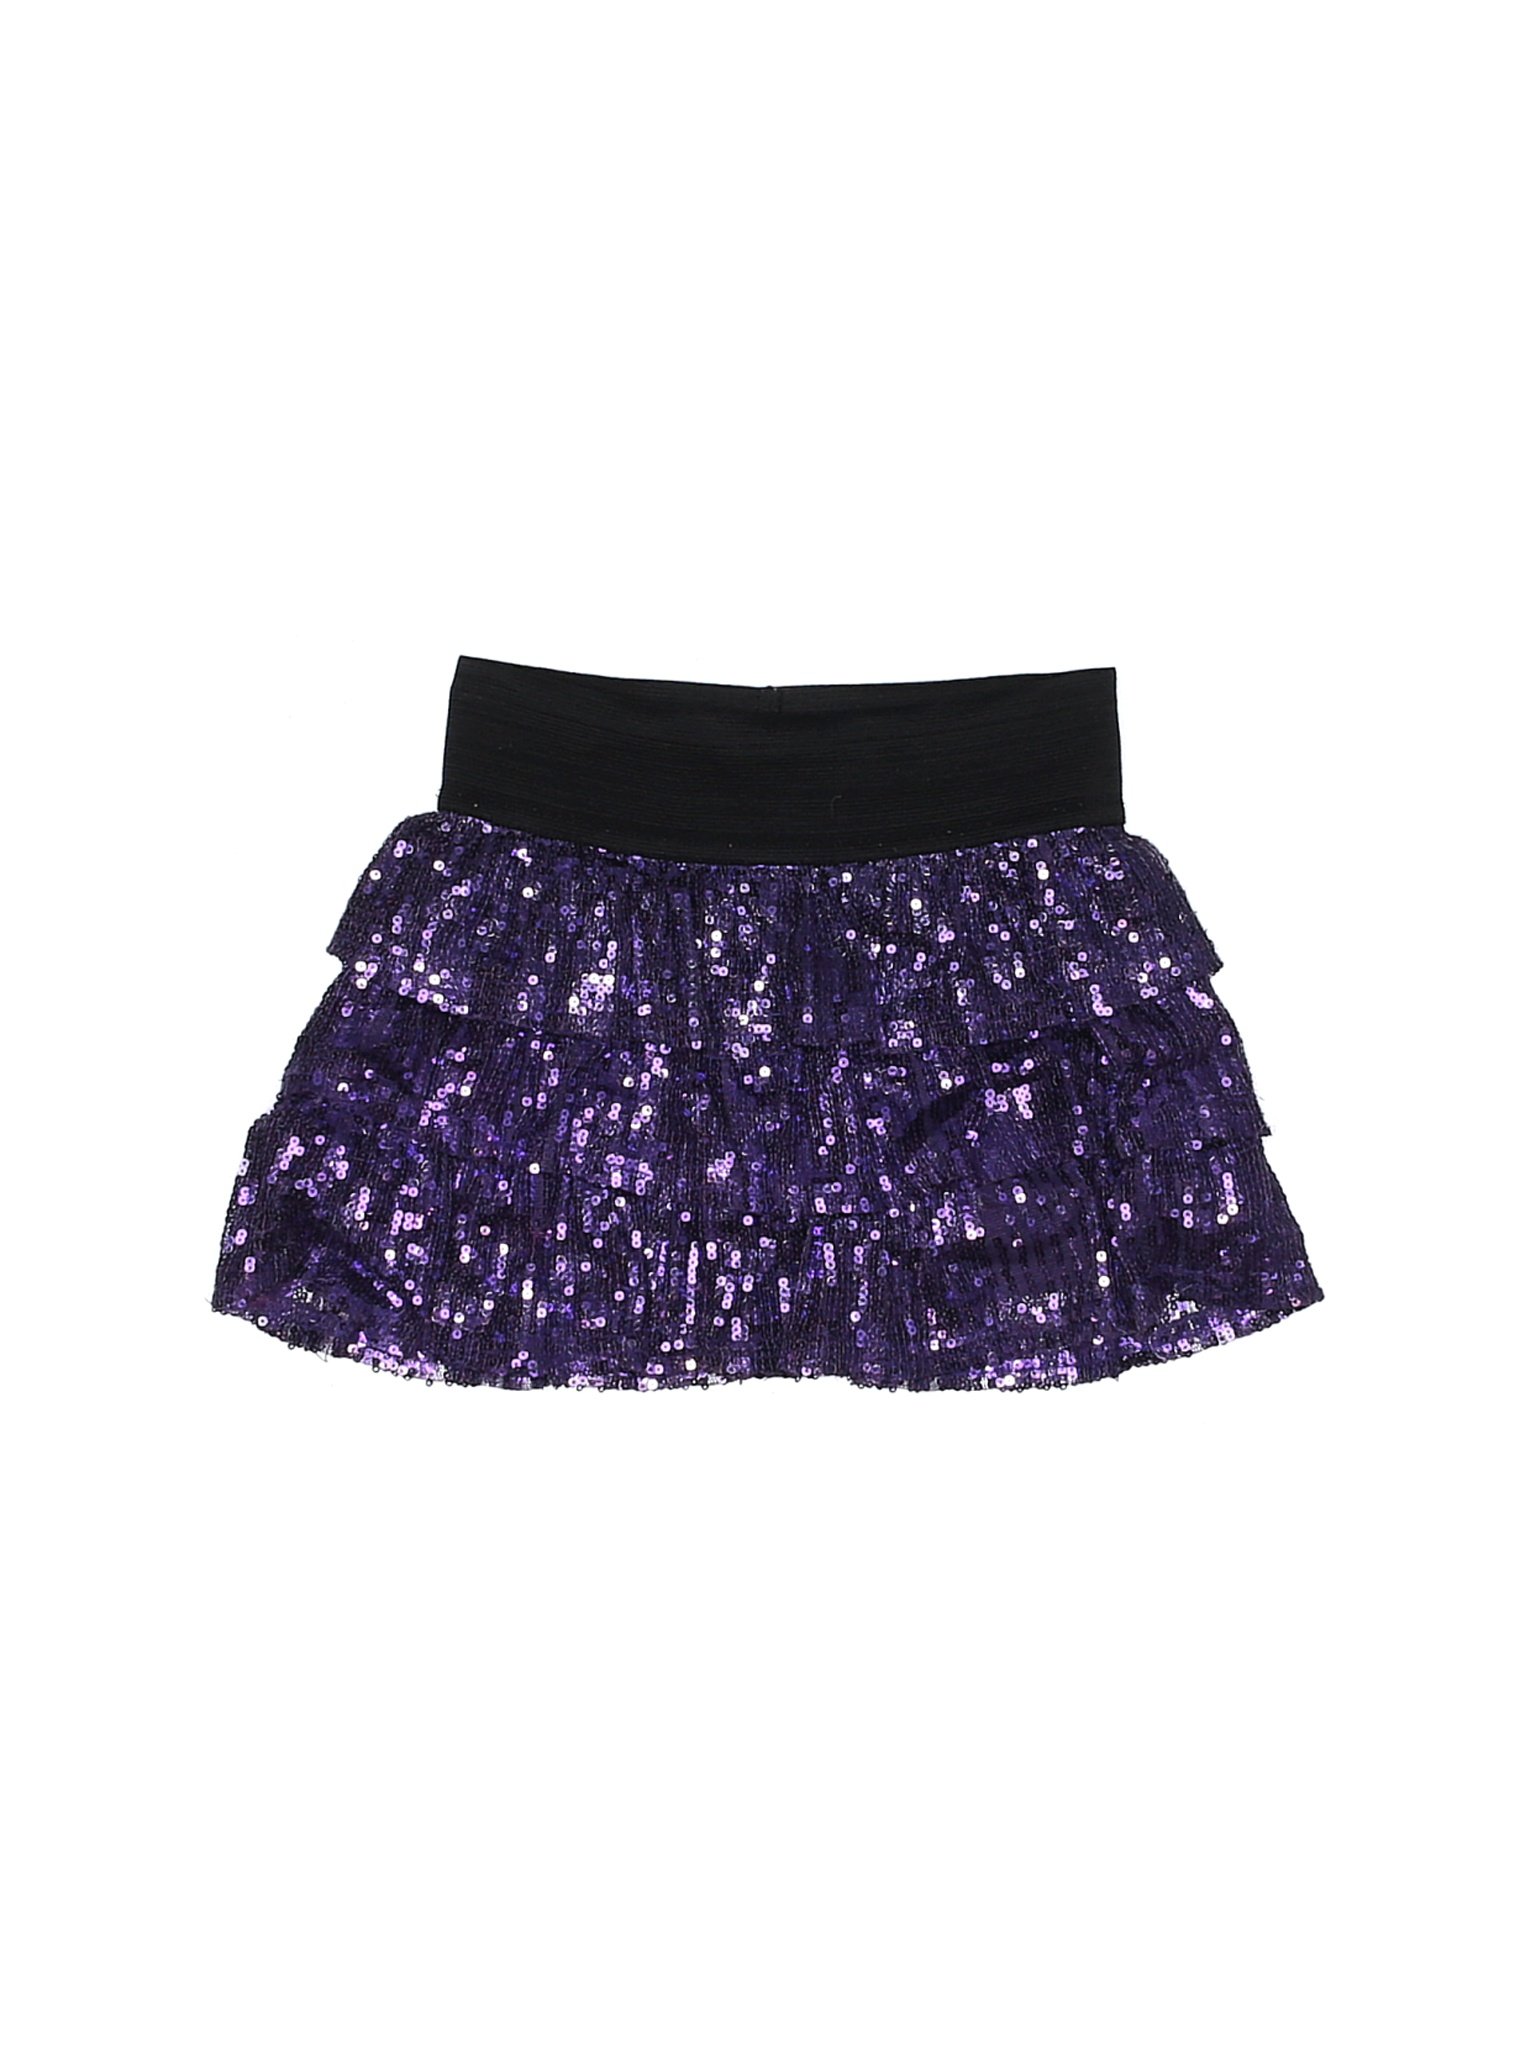 The Children's Place Girls Purple Skirt 4 | eBay